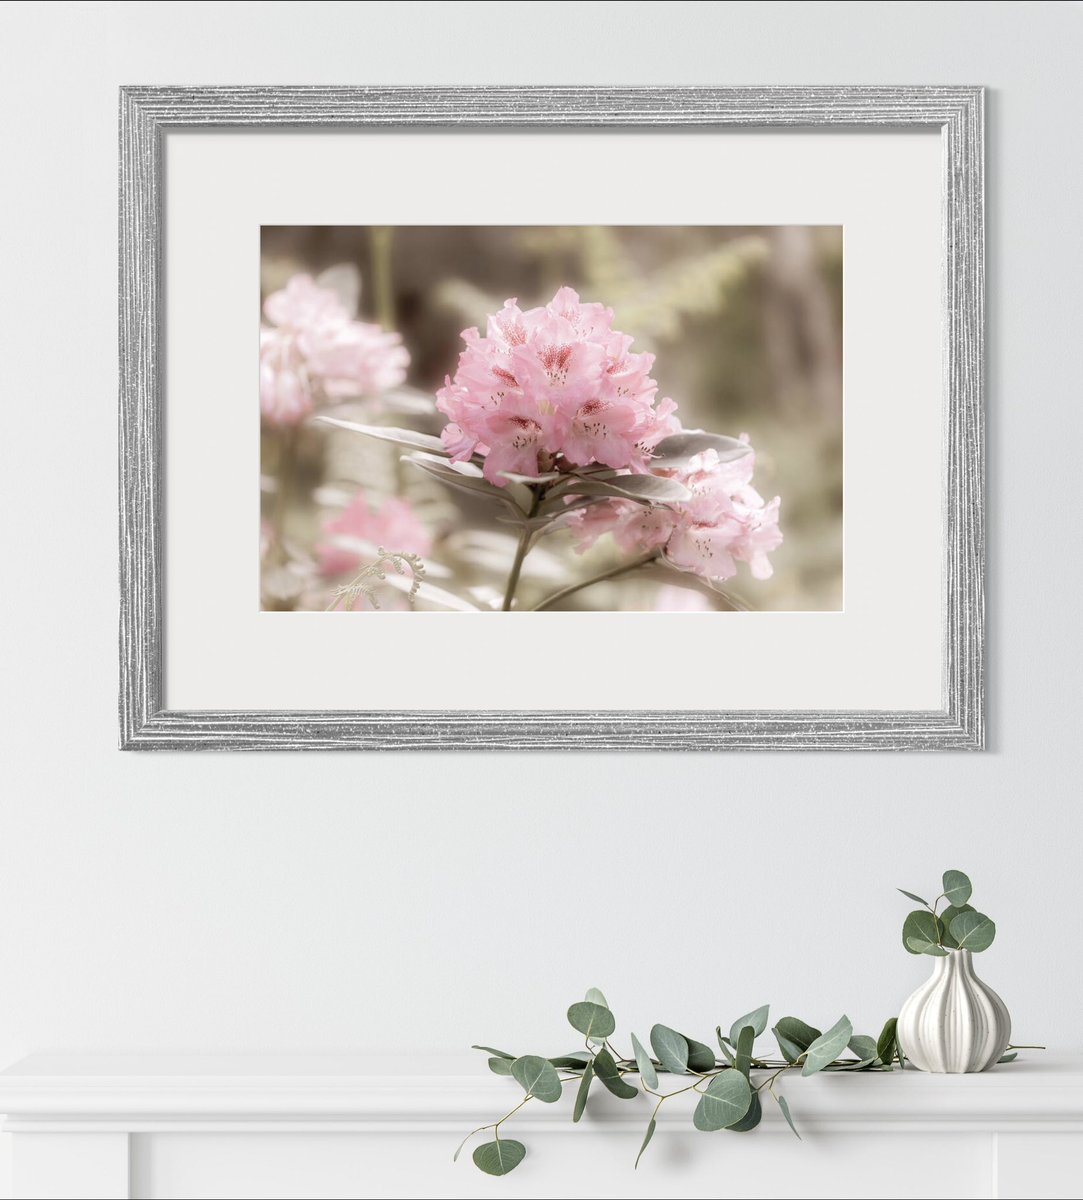 Delicate Rhododendrons

HERE: 5-tanya-smith.pixels.com/featured/delic…

#WallArtDecor #wallartforsale #PhotographyIsArt #floralphoto #FillThatEmptyWall #BuyIntoArt #giftideas